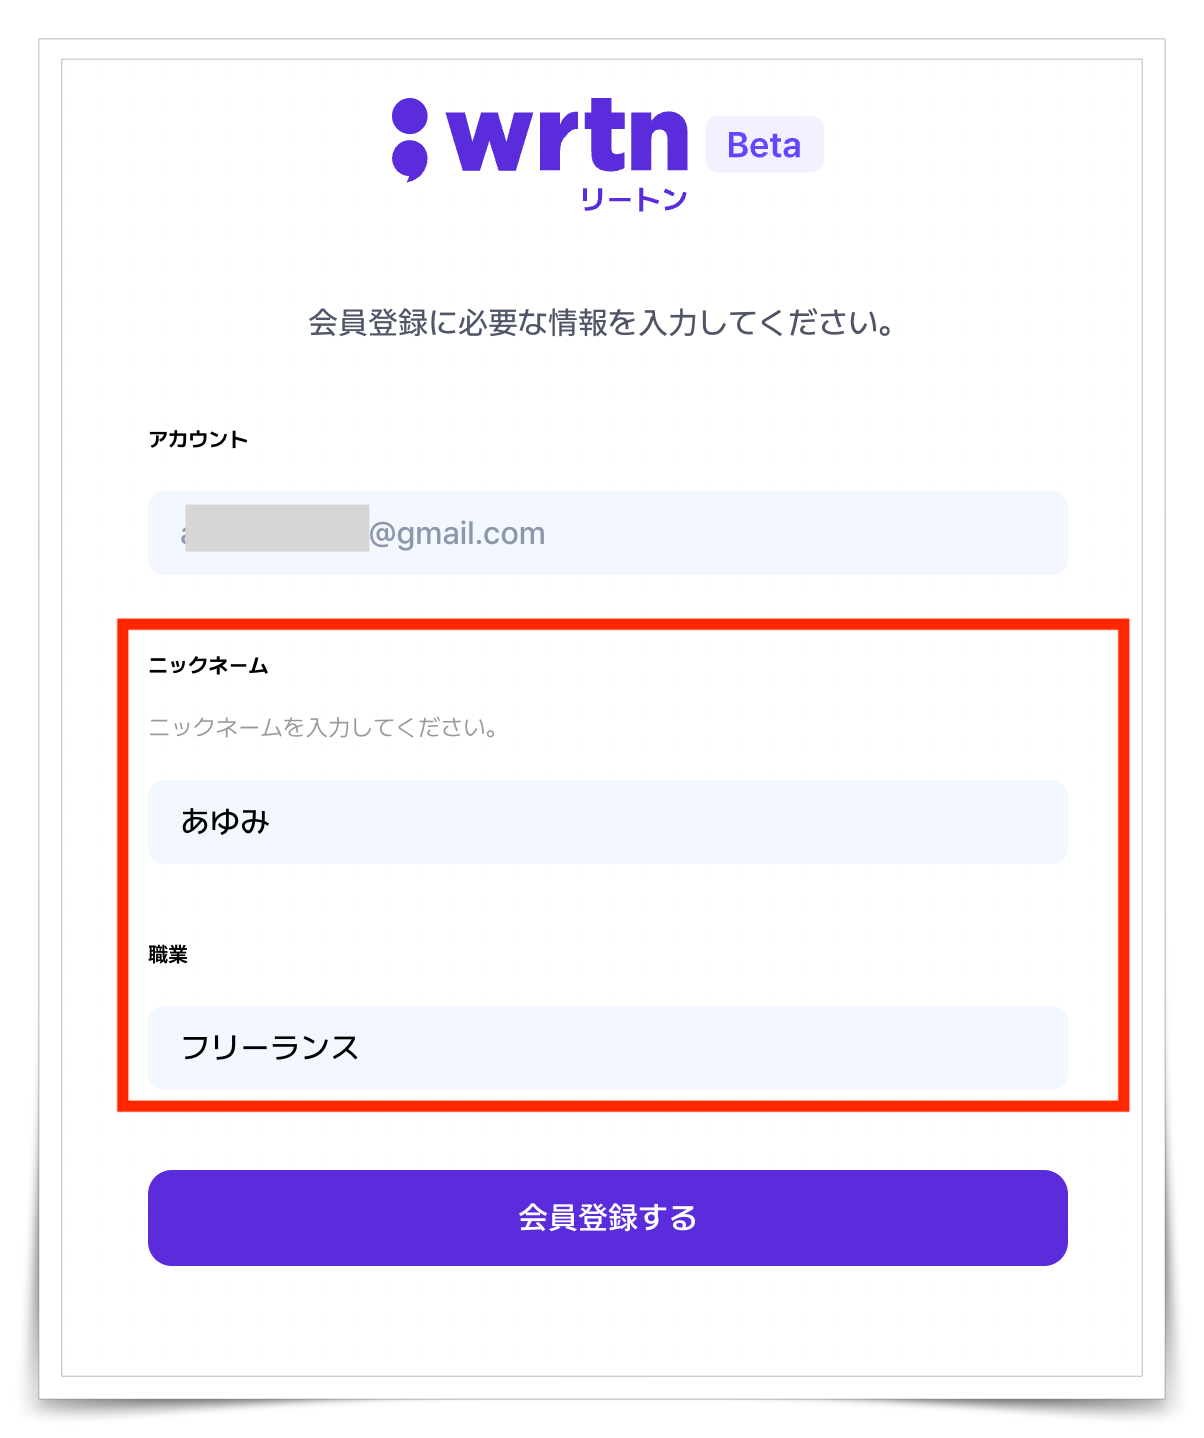 wrtn（リートン）GTP4無料 AIツール　登録方法